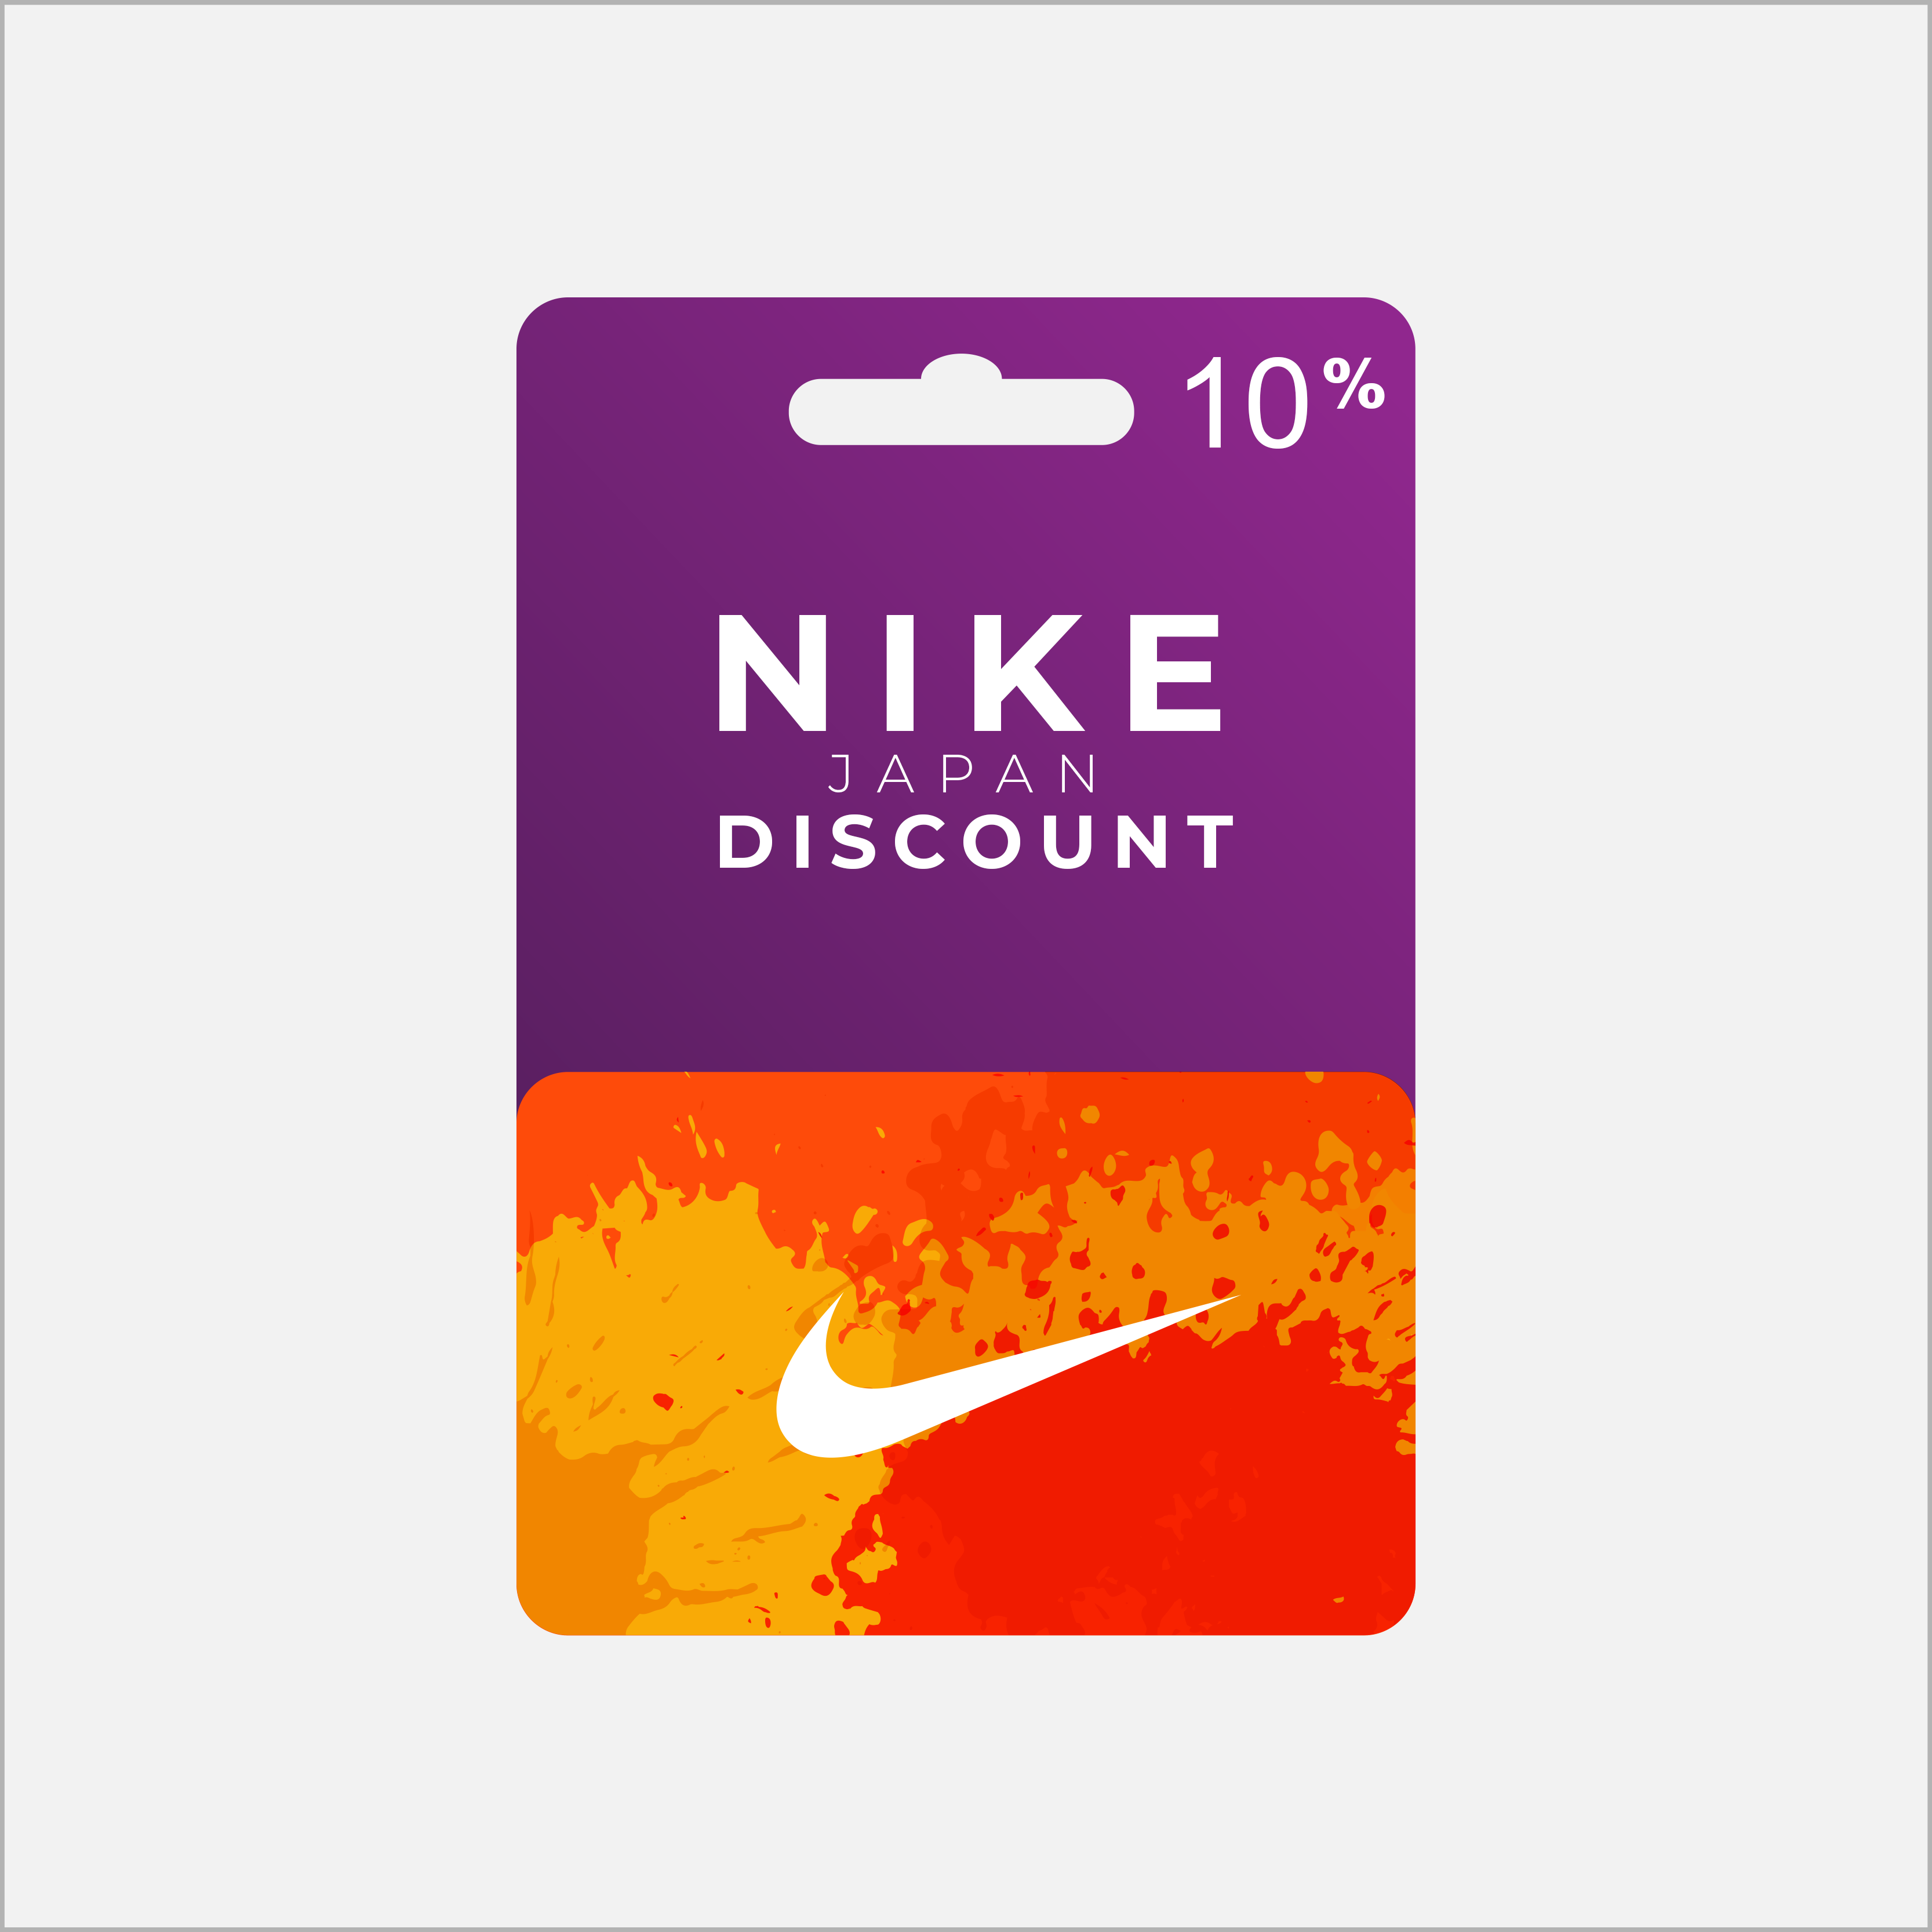 10% Nike Discount Code for Japan - Nike 